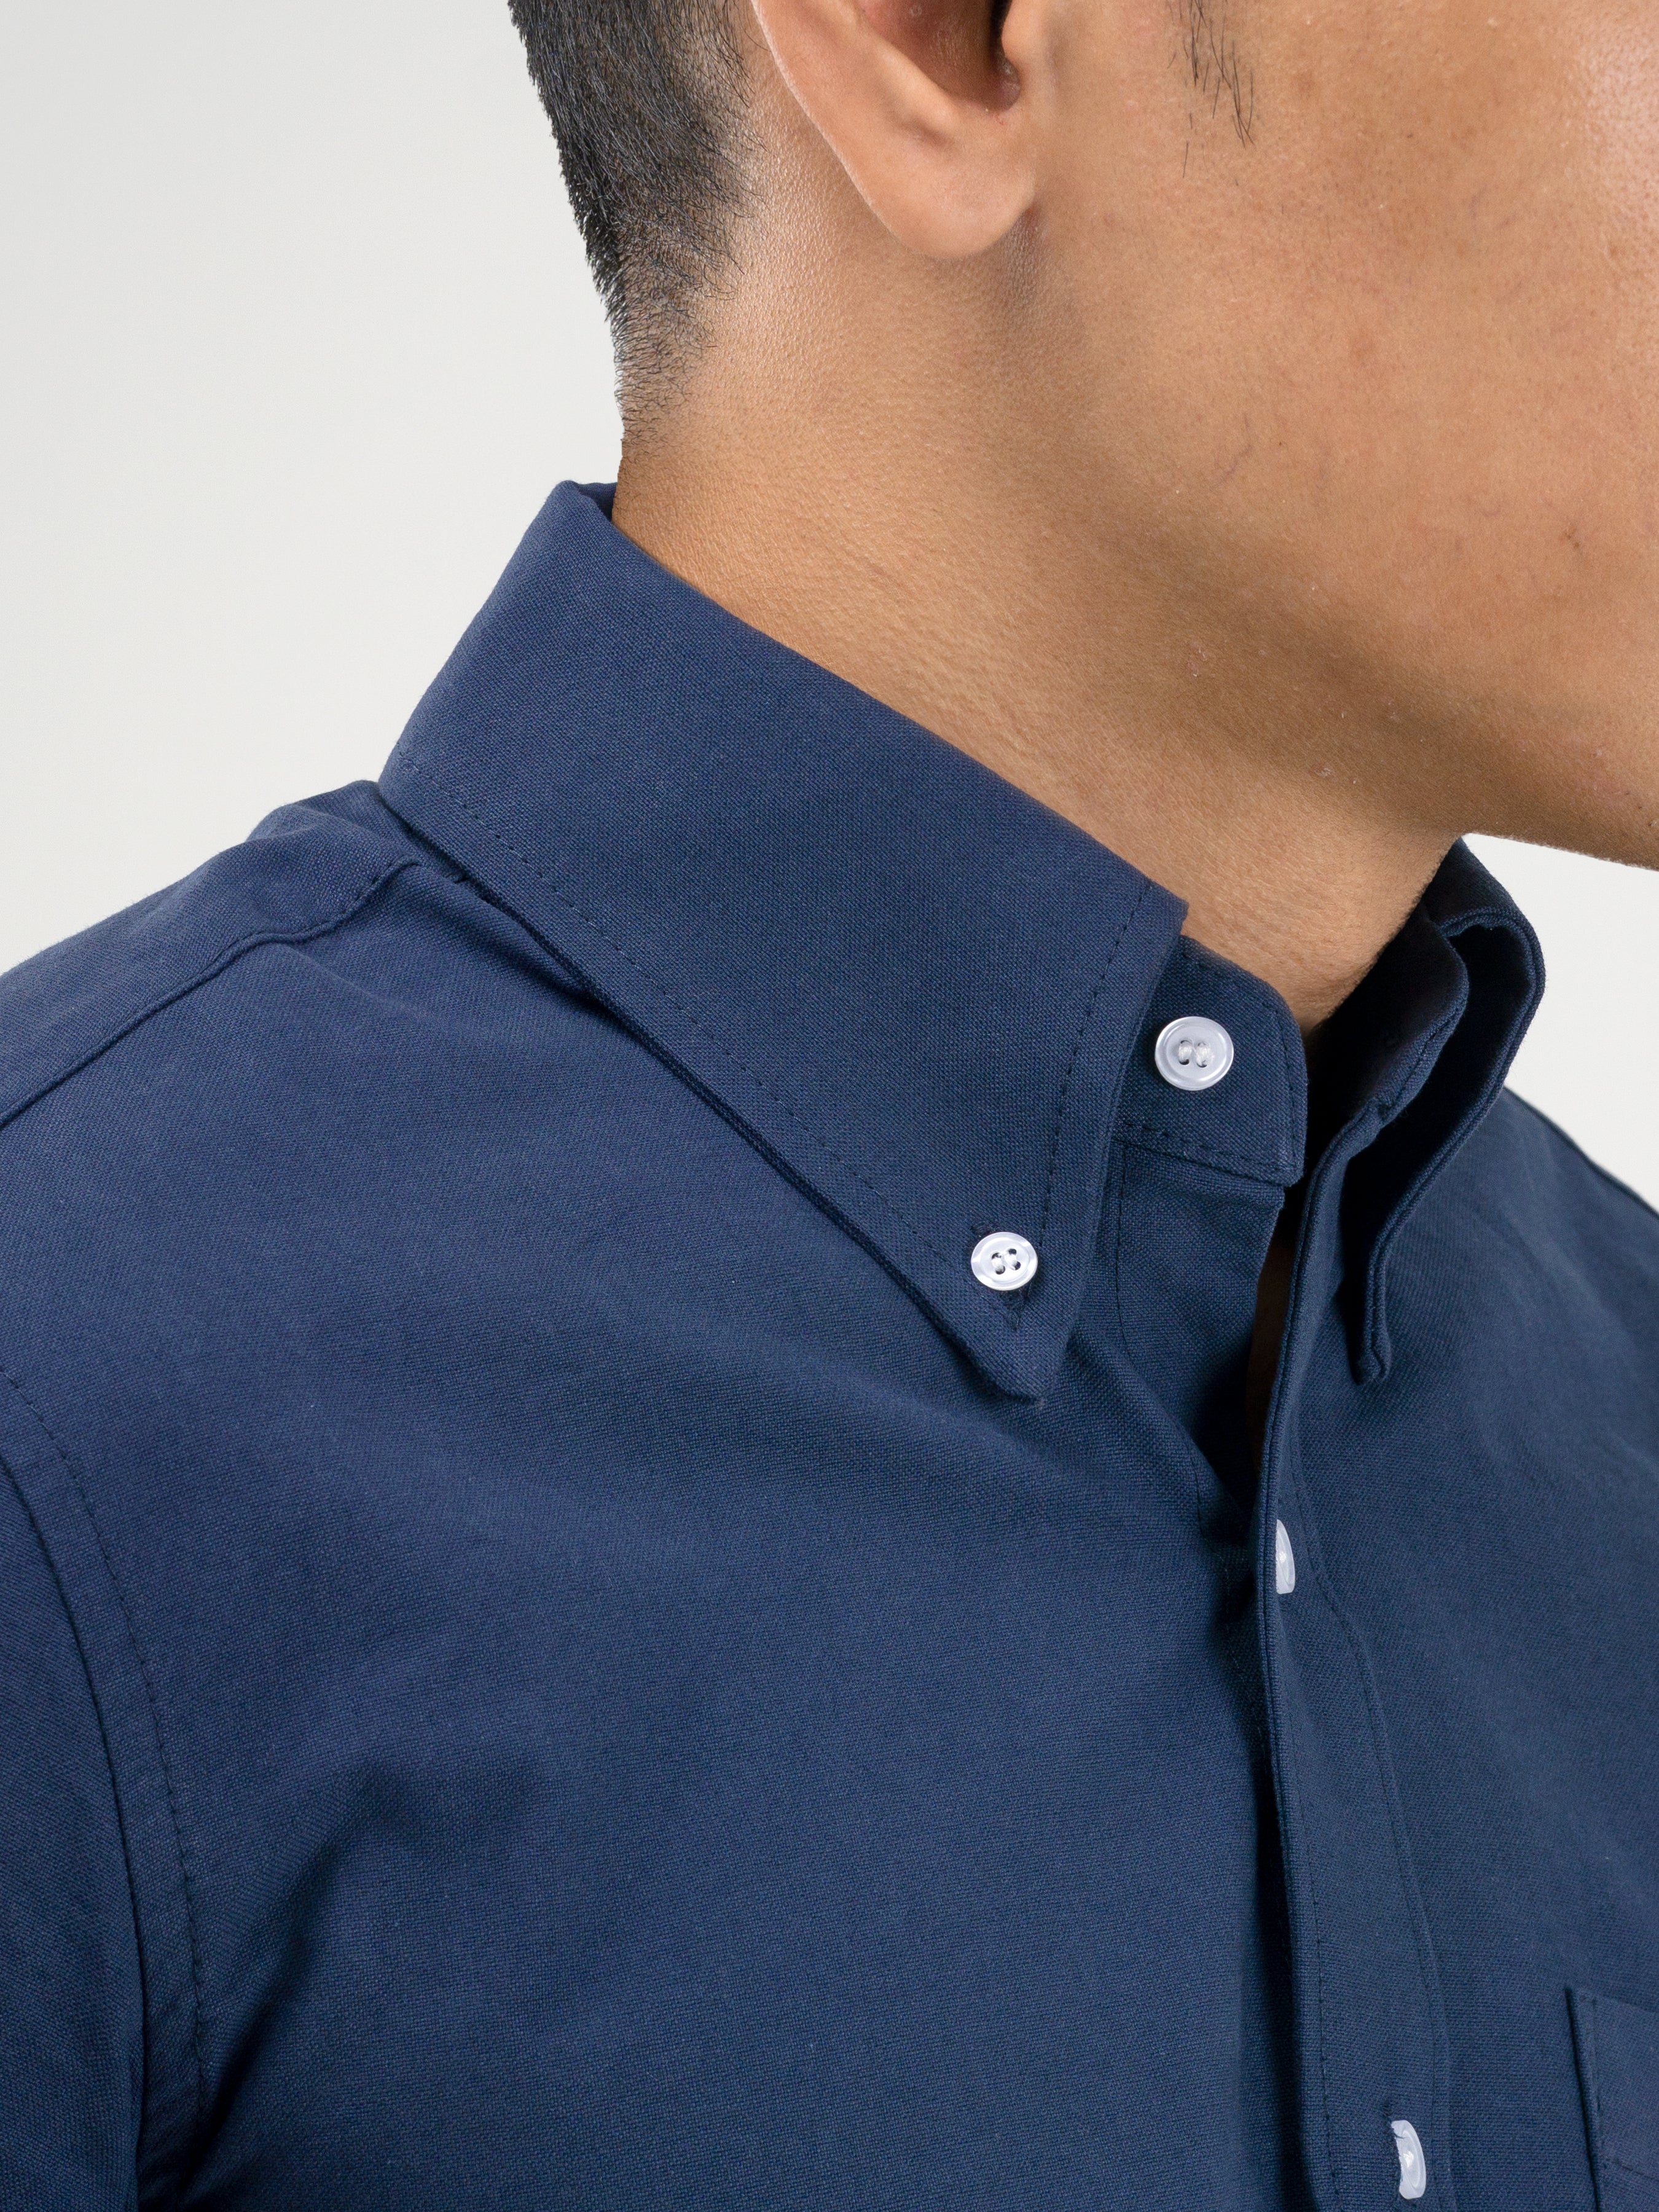 Formal Shirt - Dark Blue Oxford Button-Down Collar